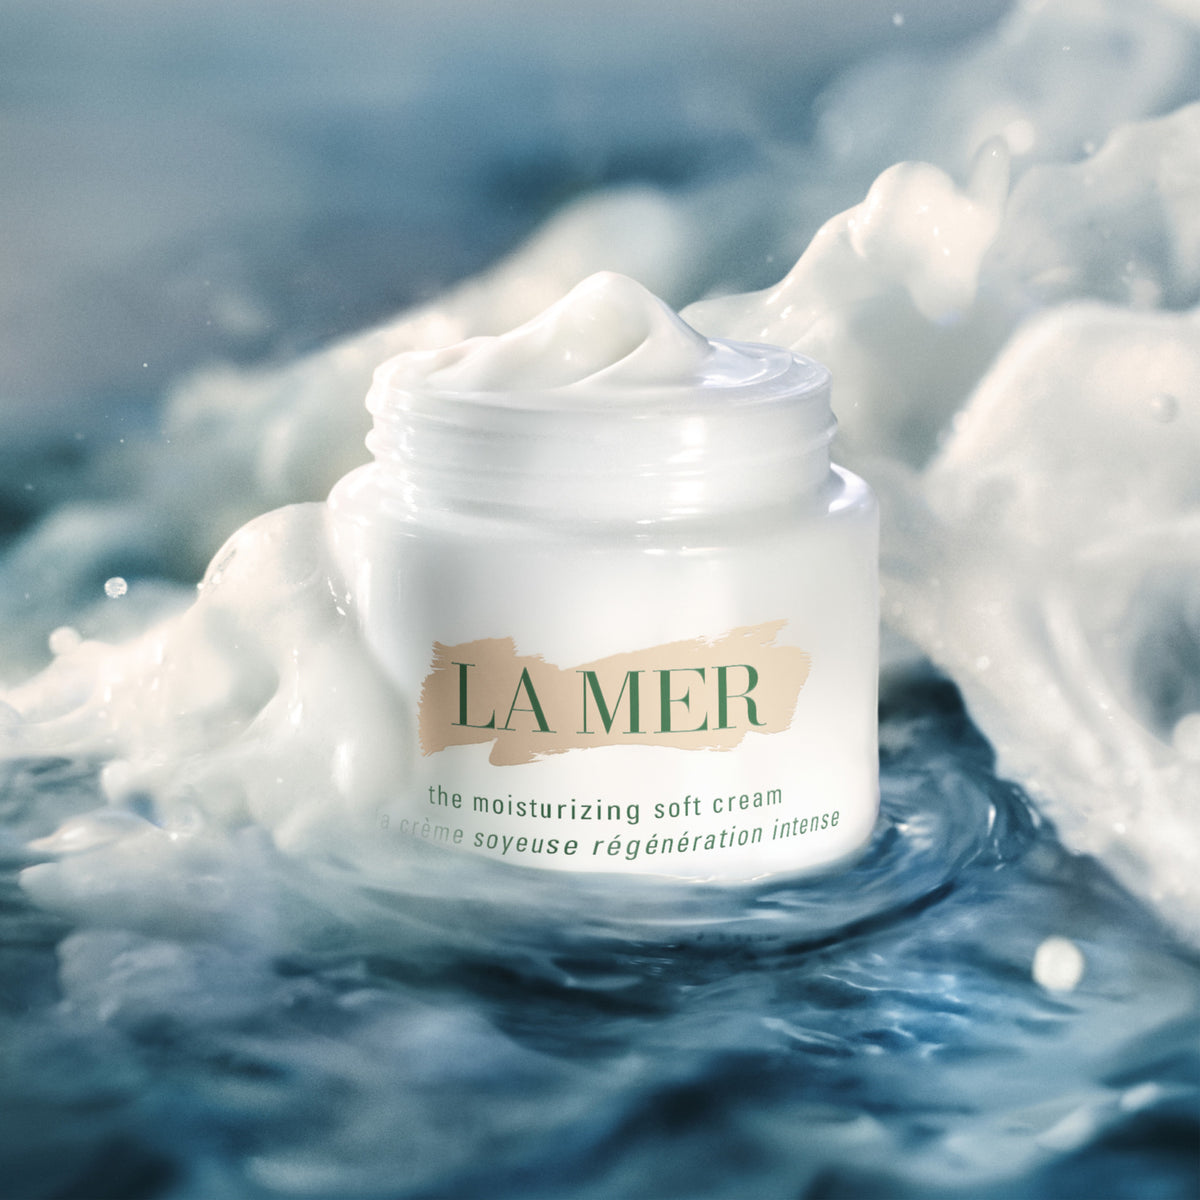 Mer – Soft La bluemercury Moisturizing The Cream